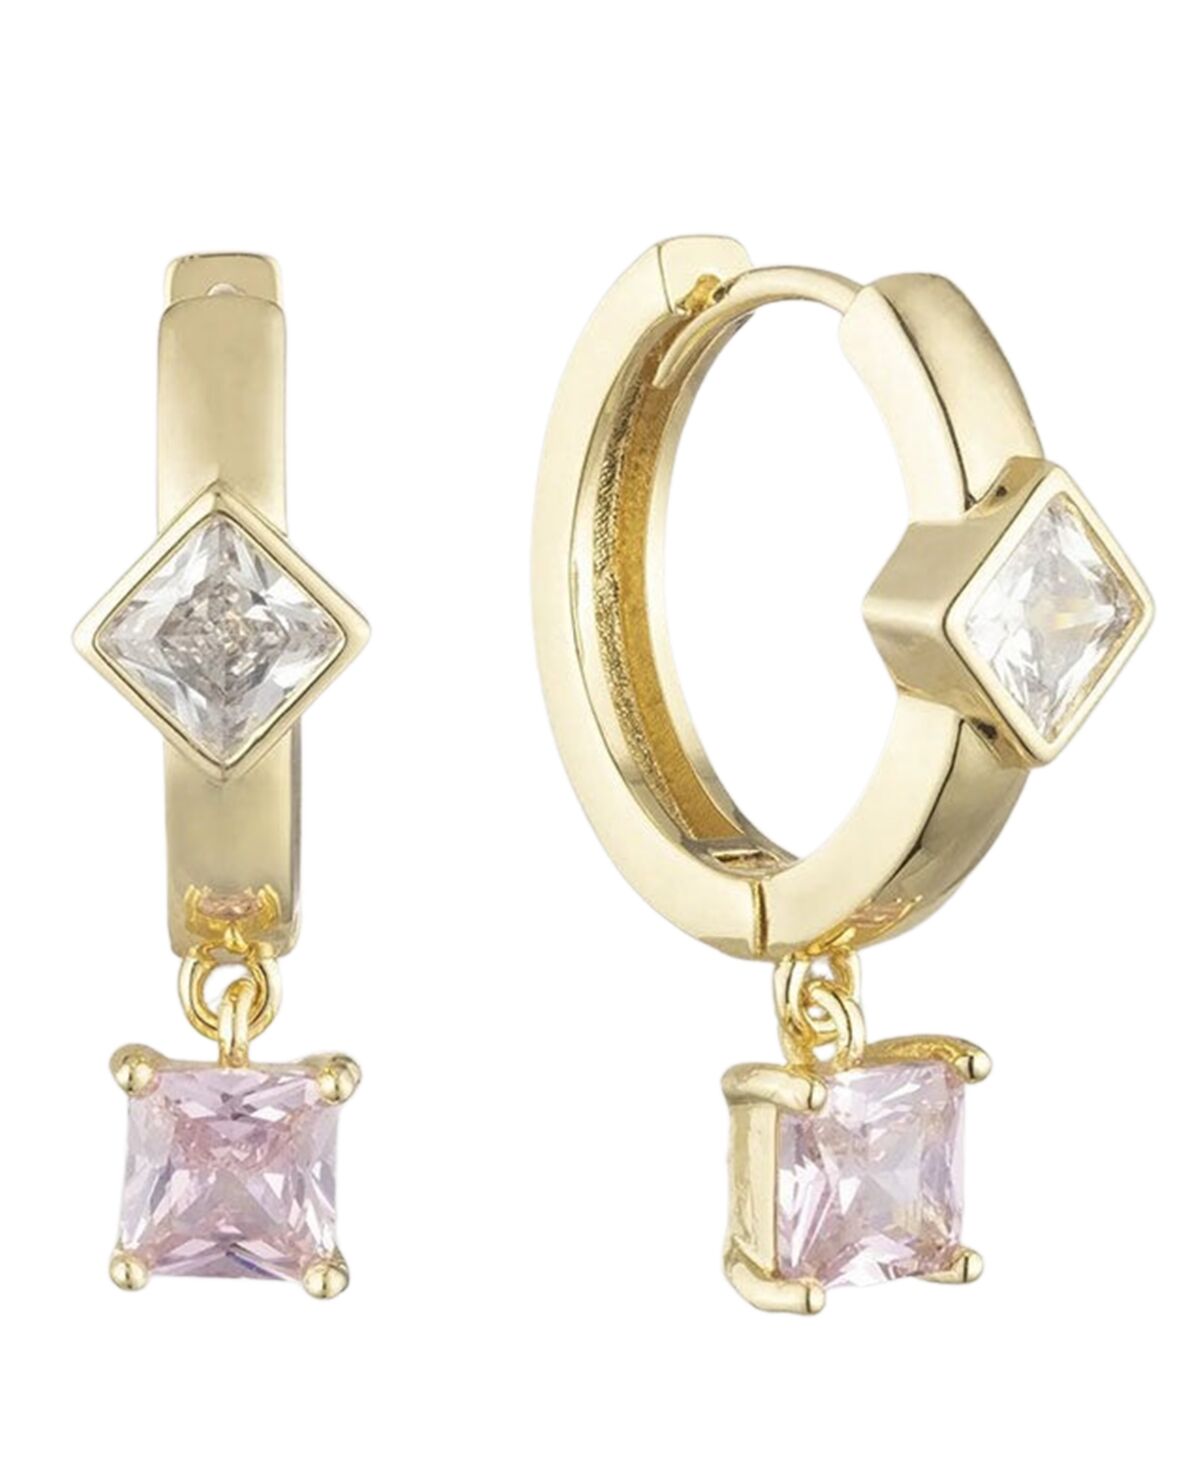 Bonheur Jewelry Giselle Crystal Hoop Drop Earrings - Karat Gold Plated Brass